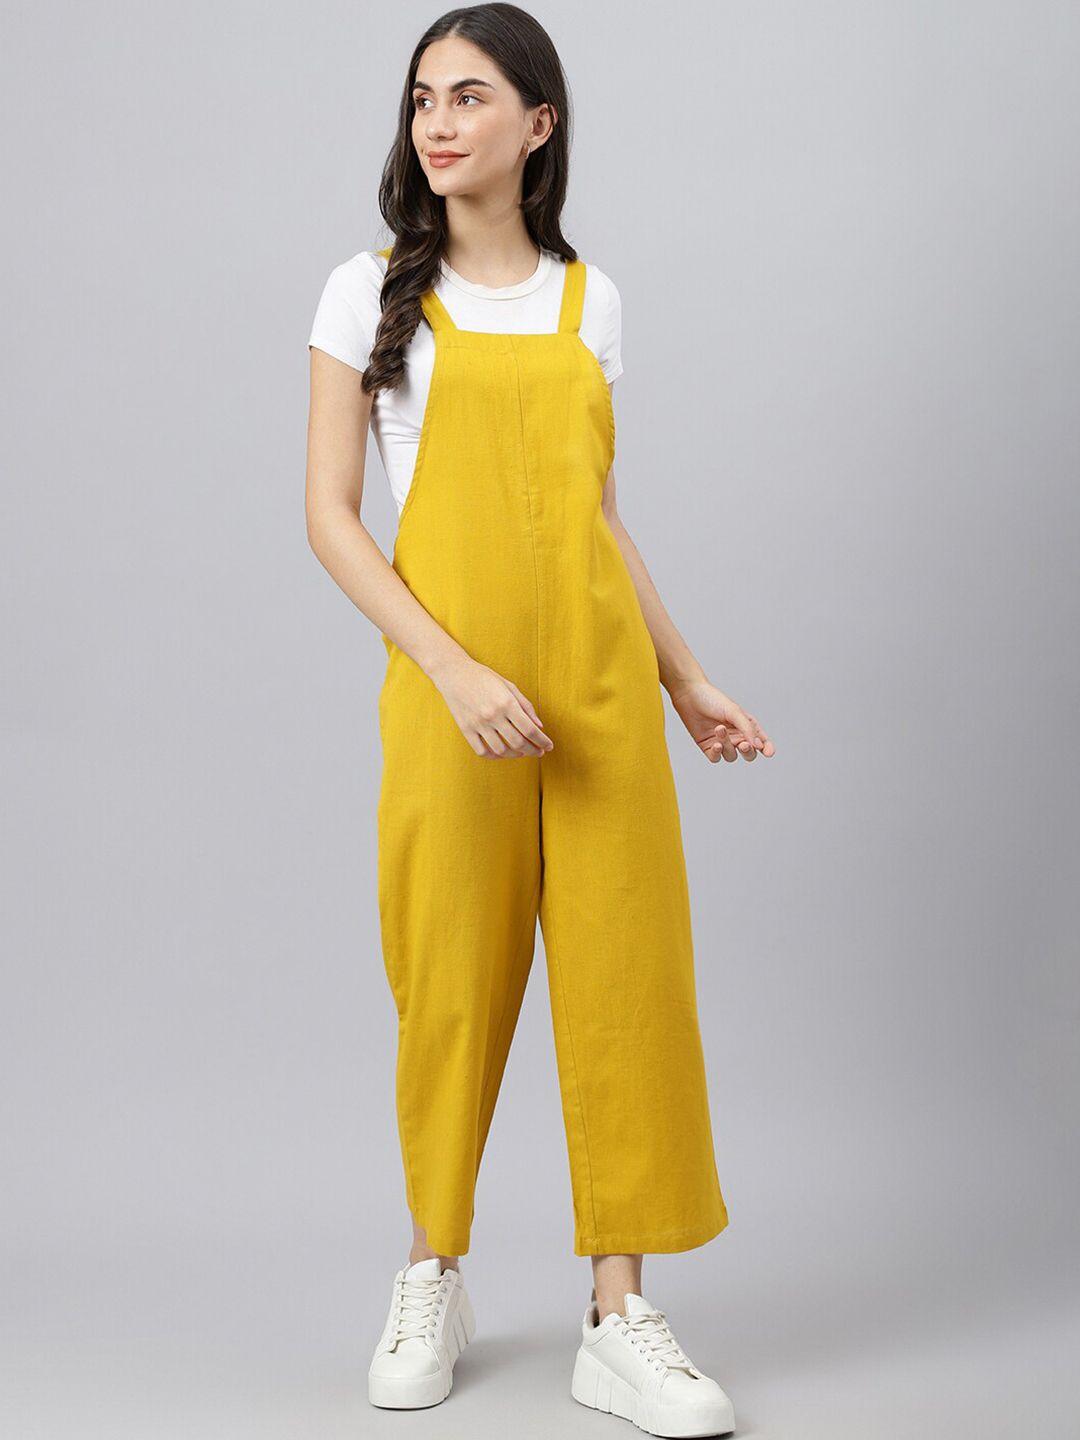 deebaco yellow & white culotte jumpsuit